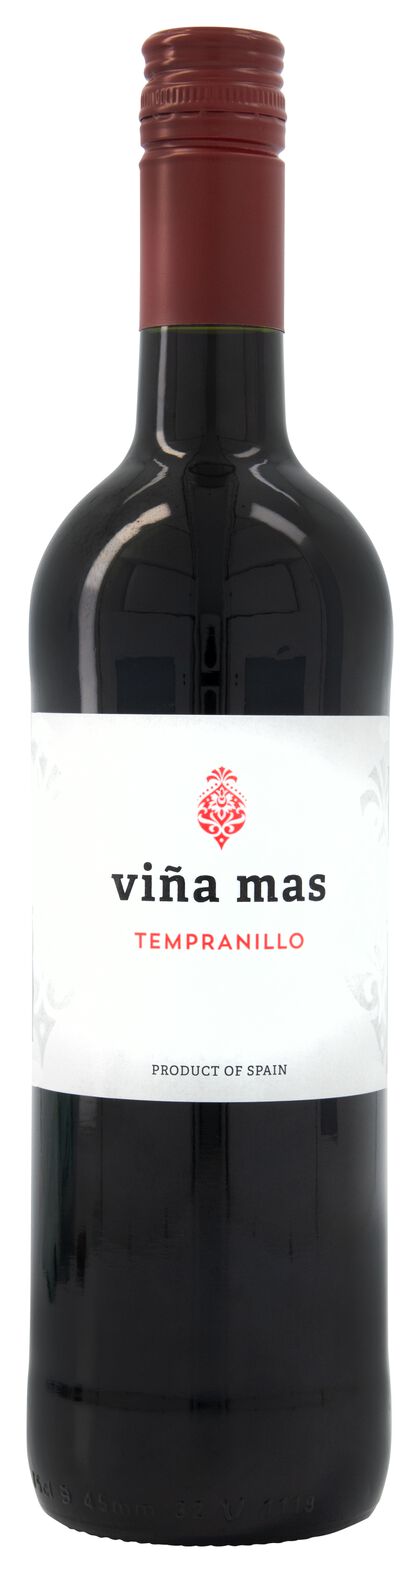 viña mas tempranillo - 0.75 L - 17367003 - HEMA